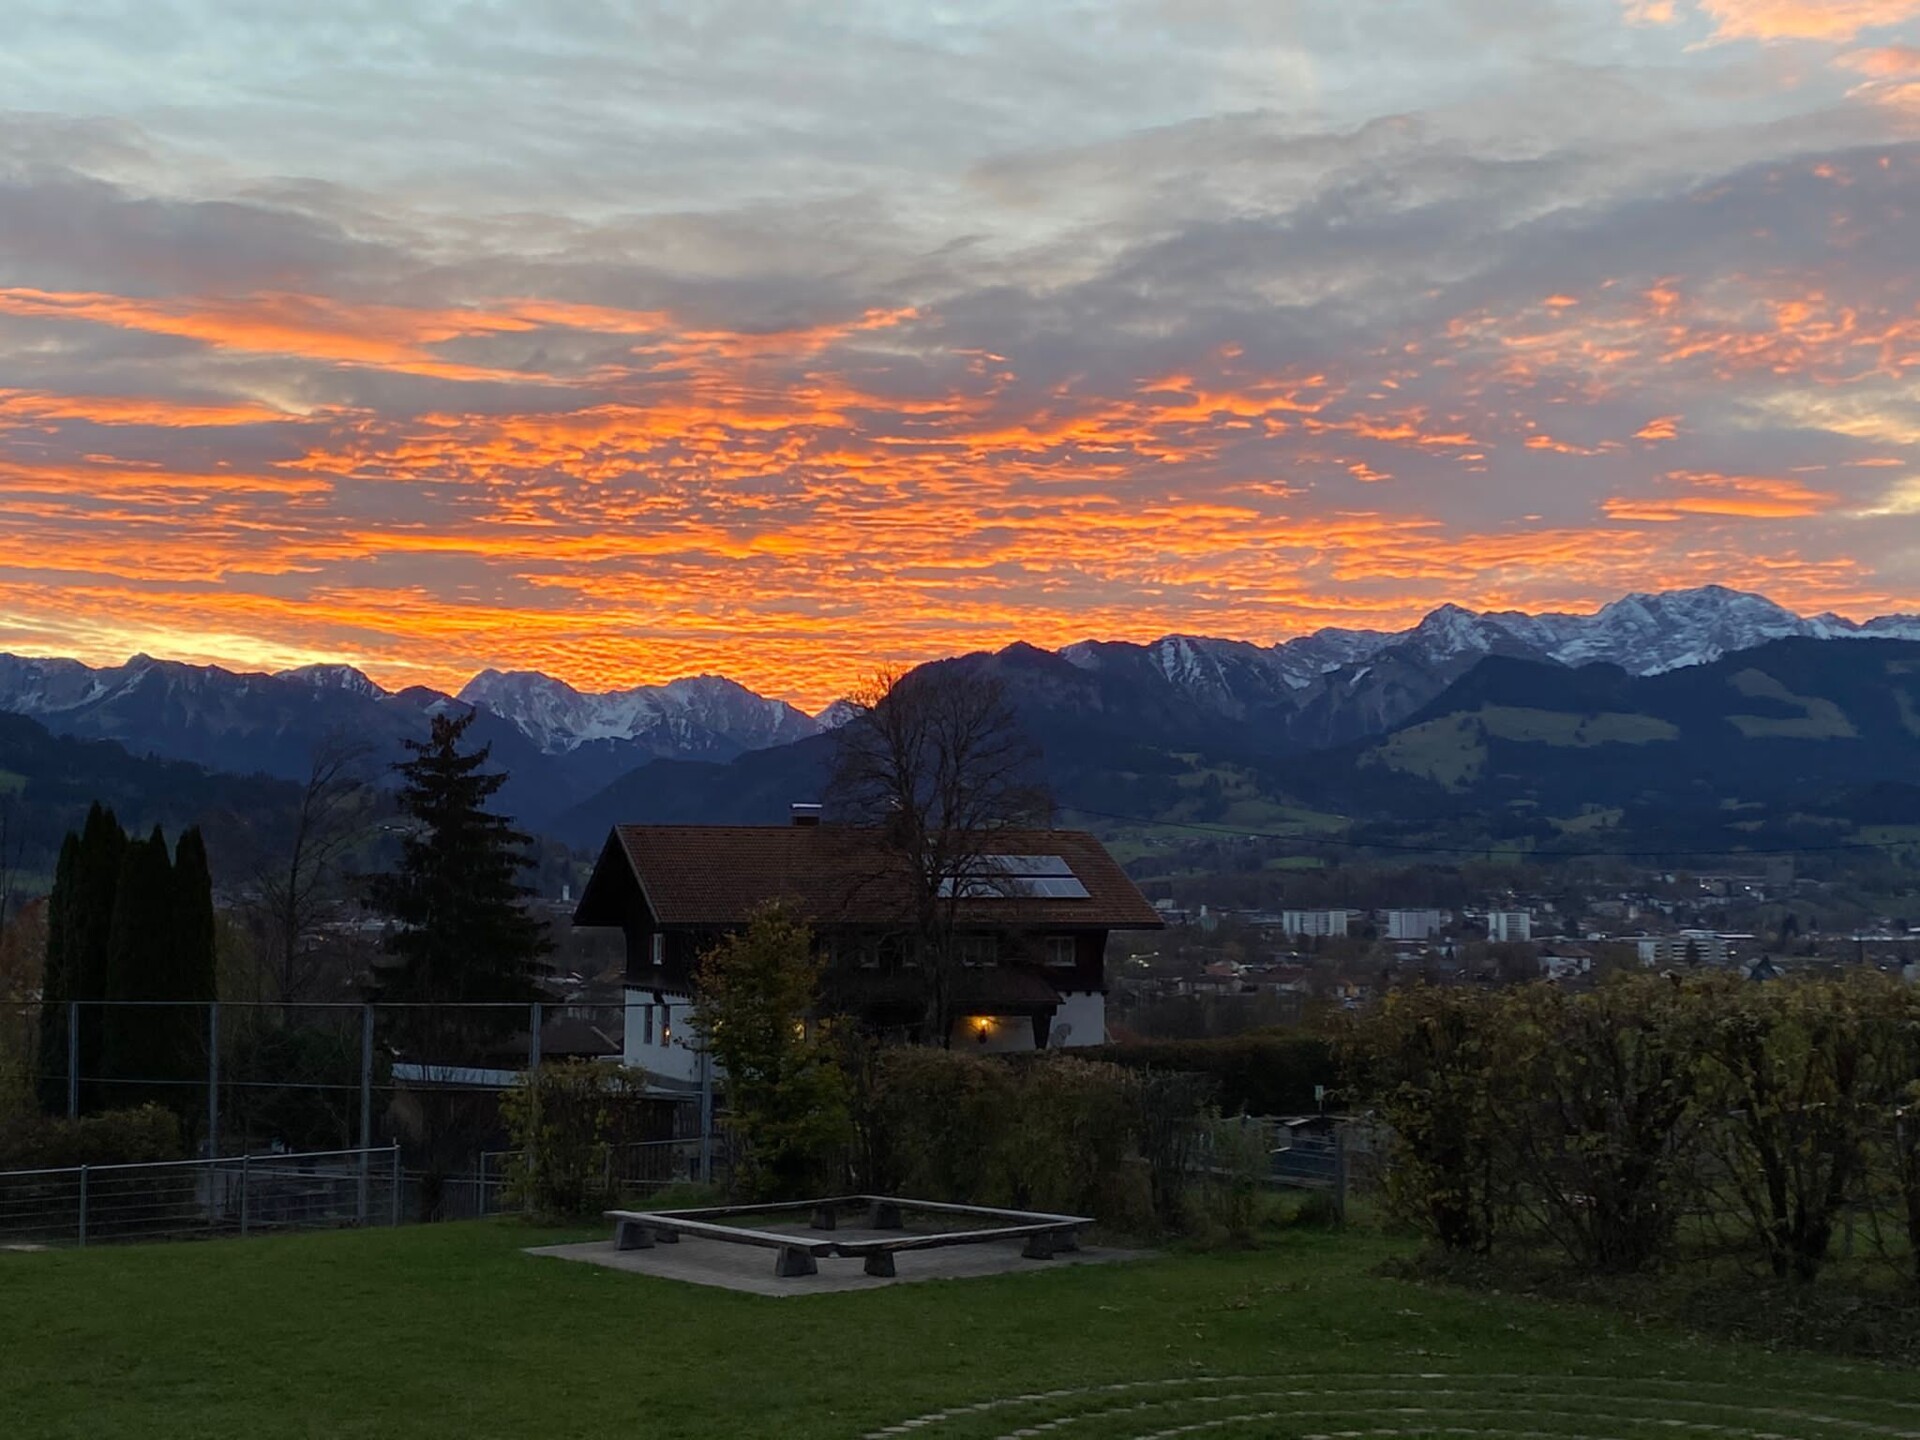 Klassenfahrt nach Blaibach, Jugendherberge bei Sonnenuntergang